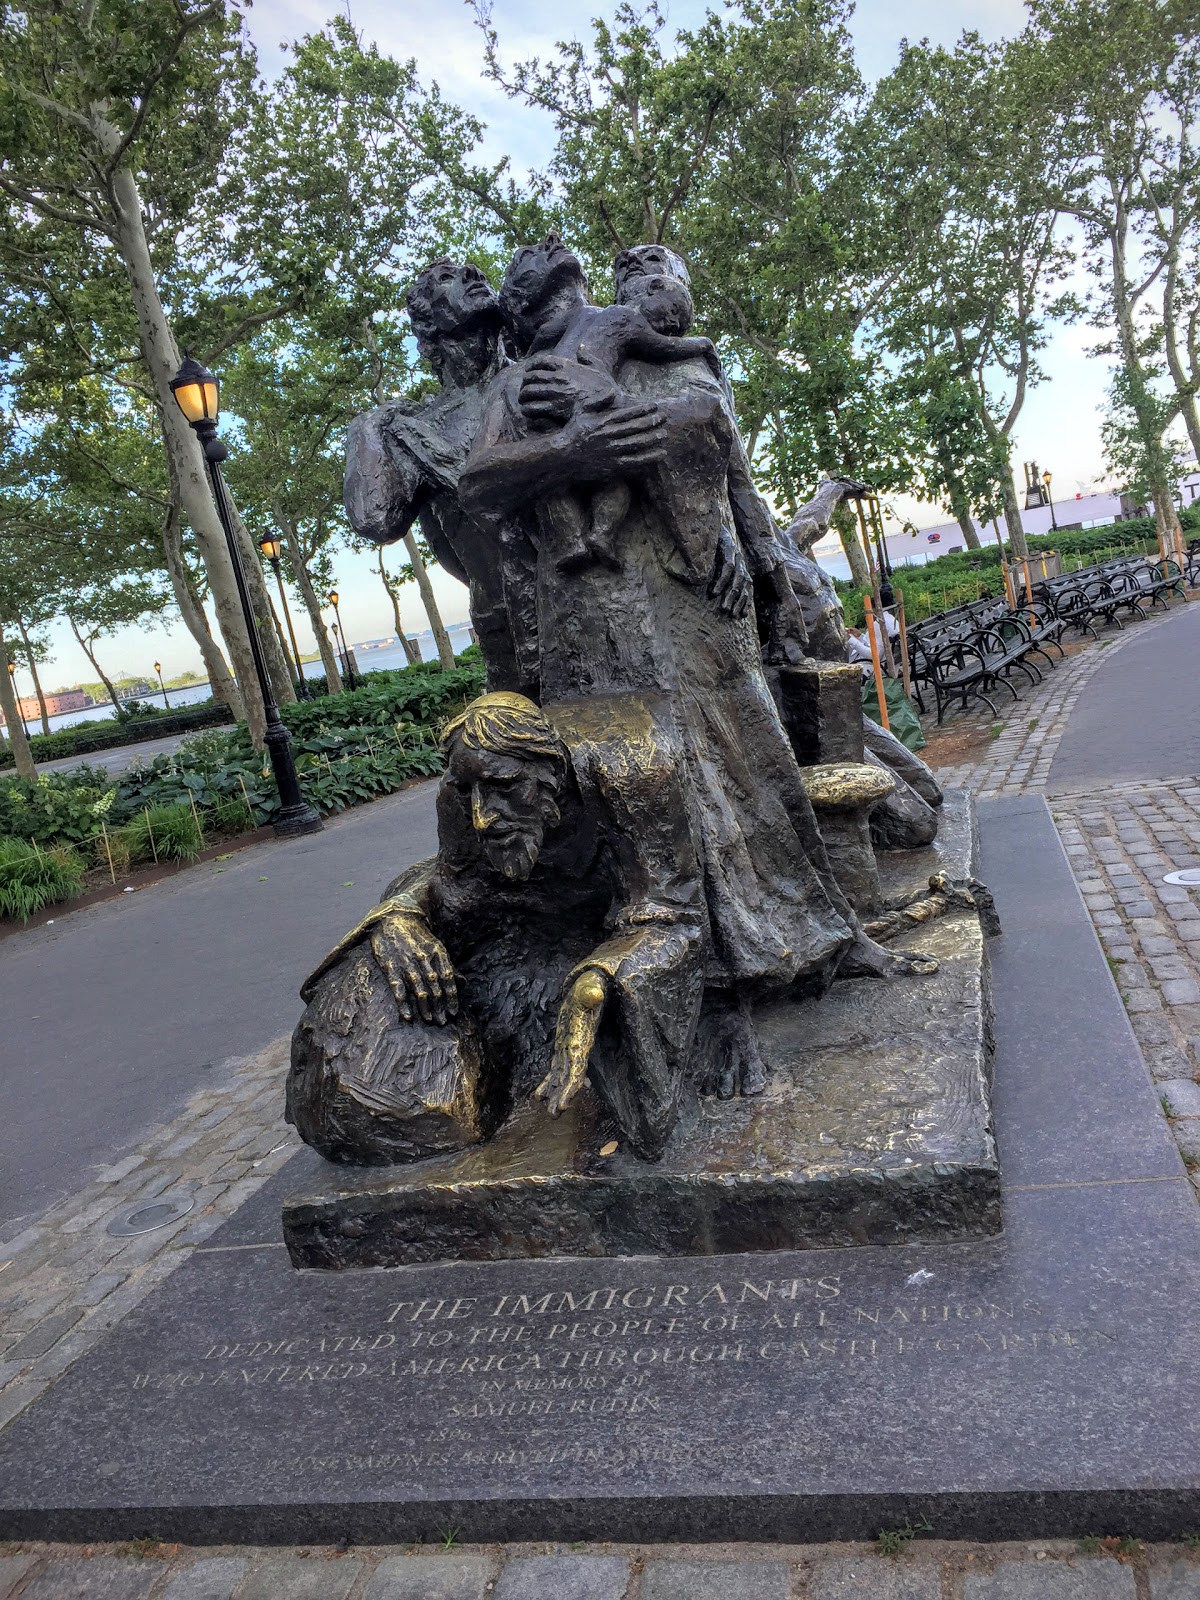 Photo of Parque y entrada estatua libertad in New York City, New York, United States - 5 Picture of Point of interest, Establishment, Park